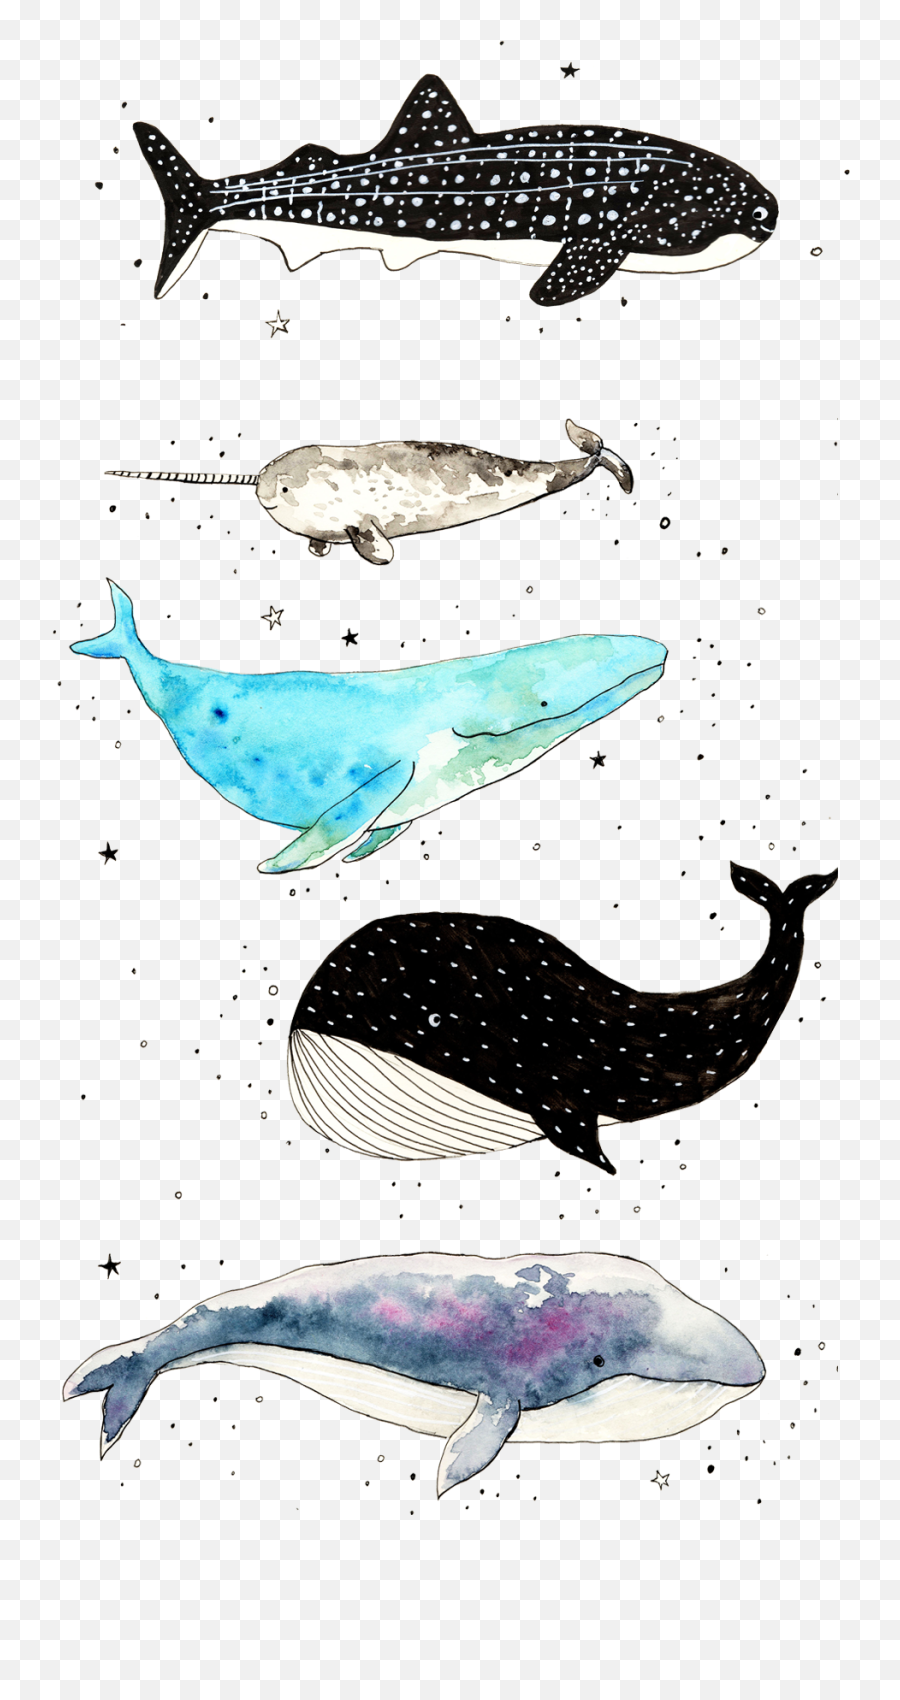 Whale Iphone Wallpaper Emoji,Unicorn Emoji Wallpaper For Iphone